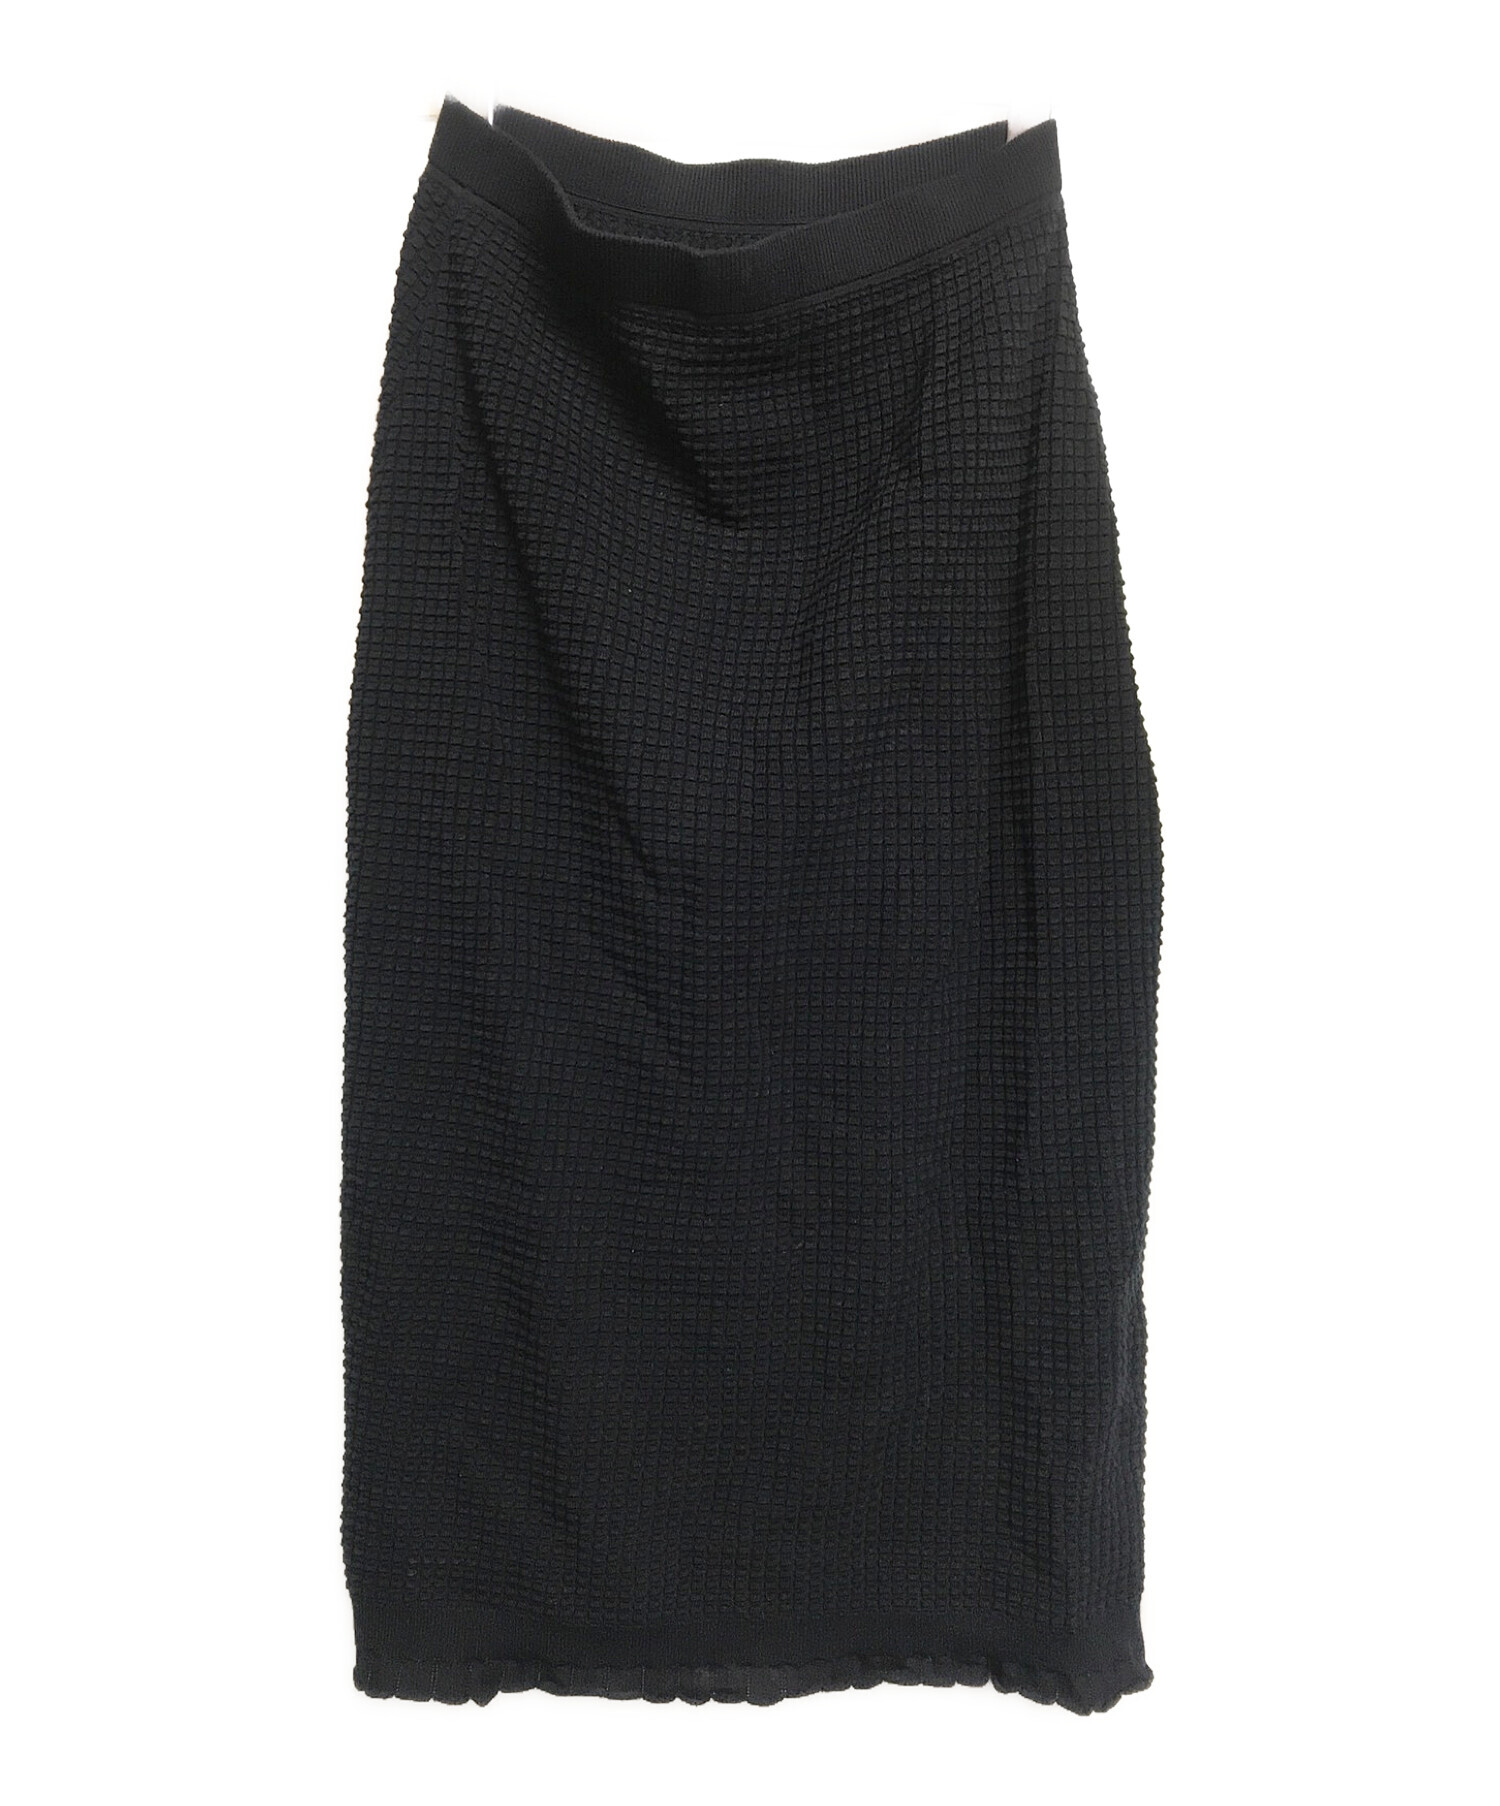 theory (セオリー) Bristol Cotton Lace Trim Skirt ネイビー サイズ:M